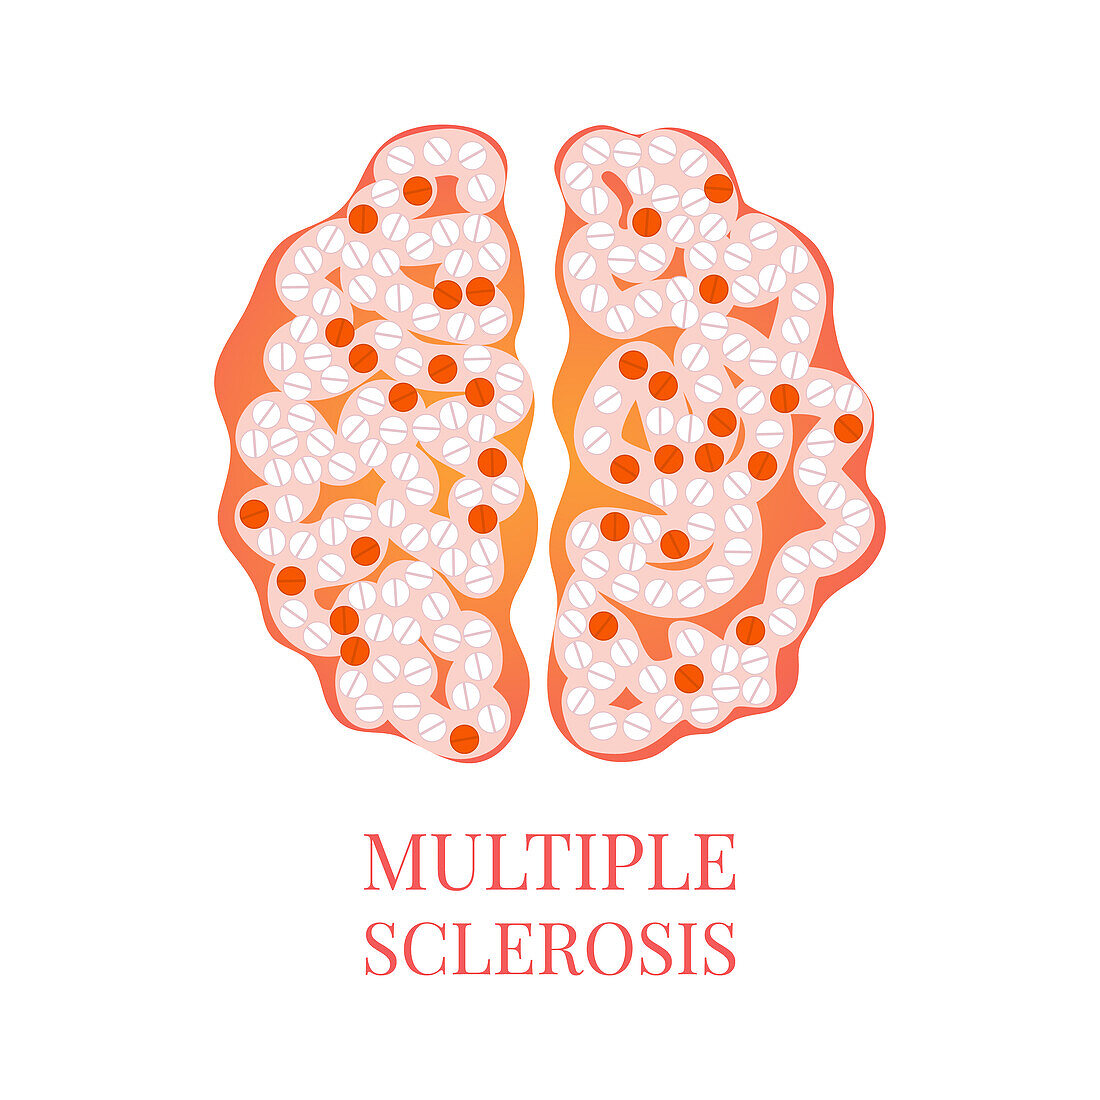 Multiple sclerosis, conceptual illustration